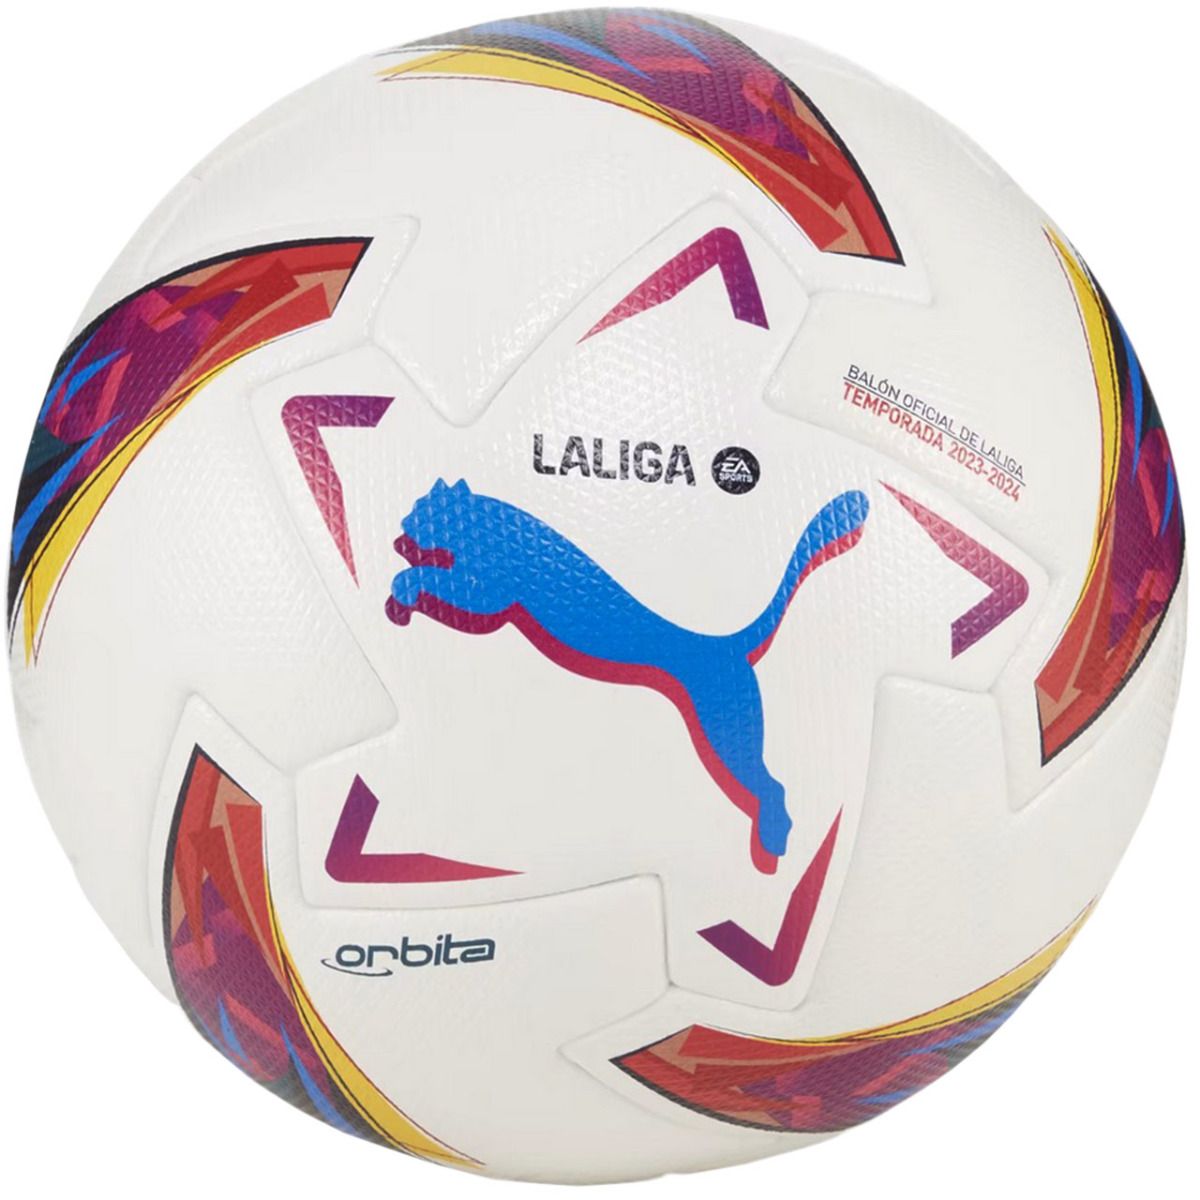 PUMA Minge de fotbal Orbita LaLiga 1 FIFA Quality 84106 01